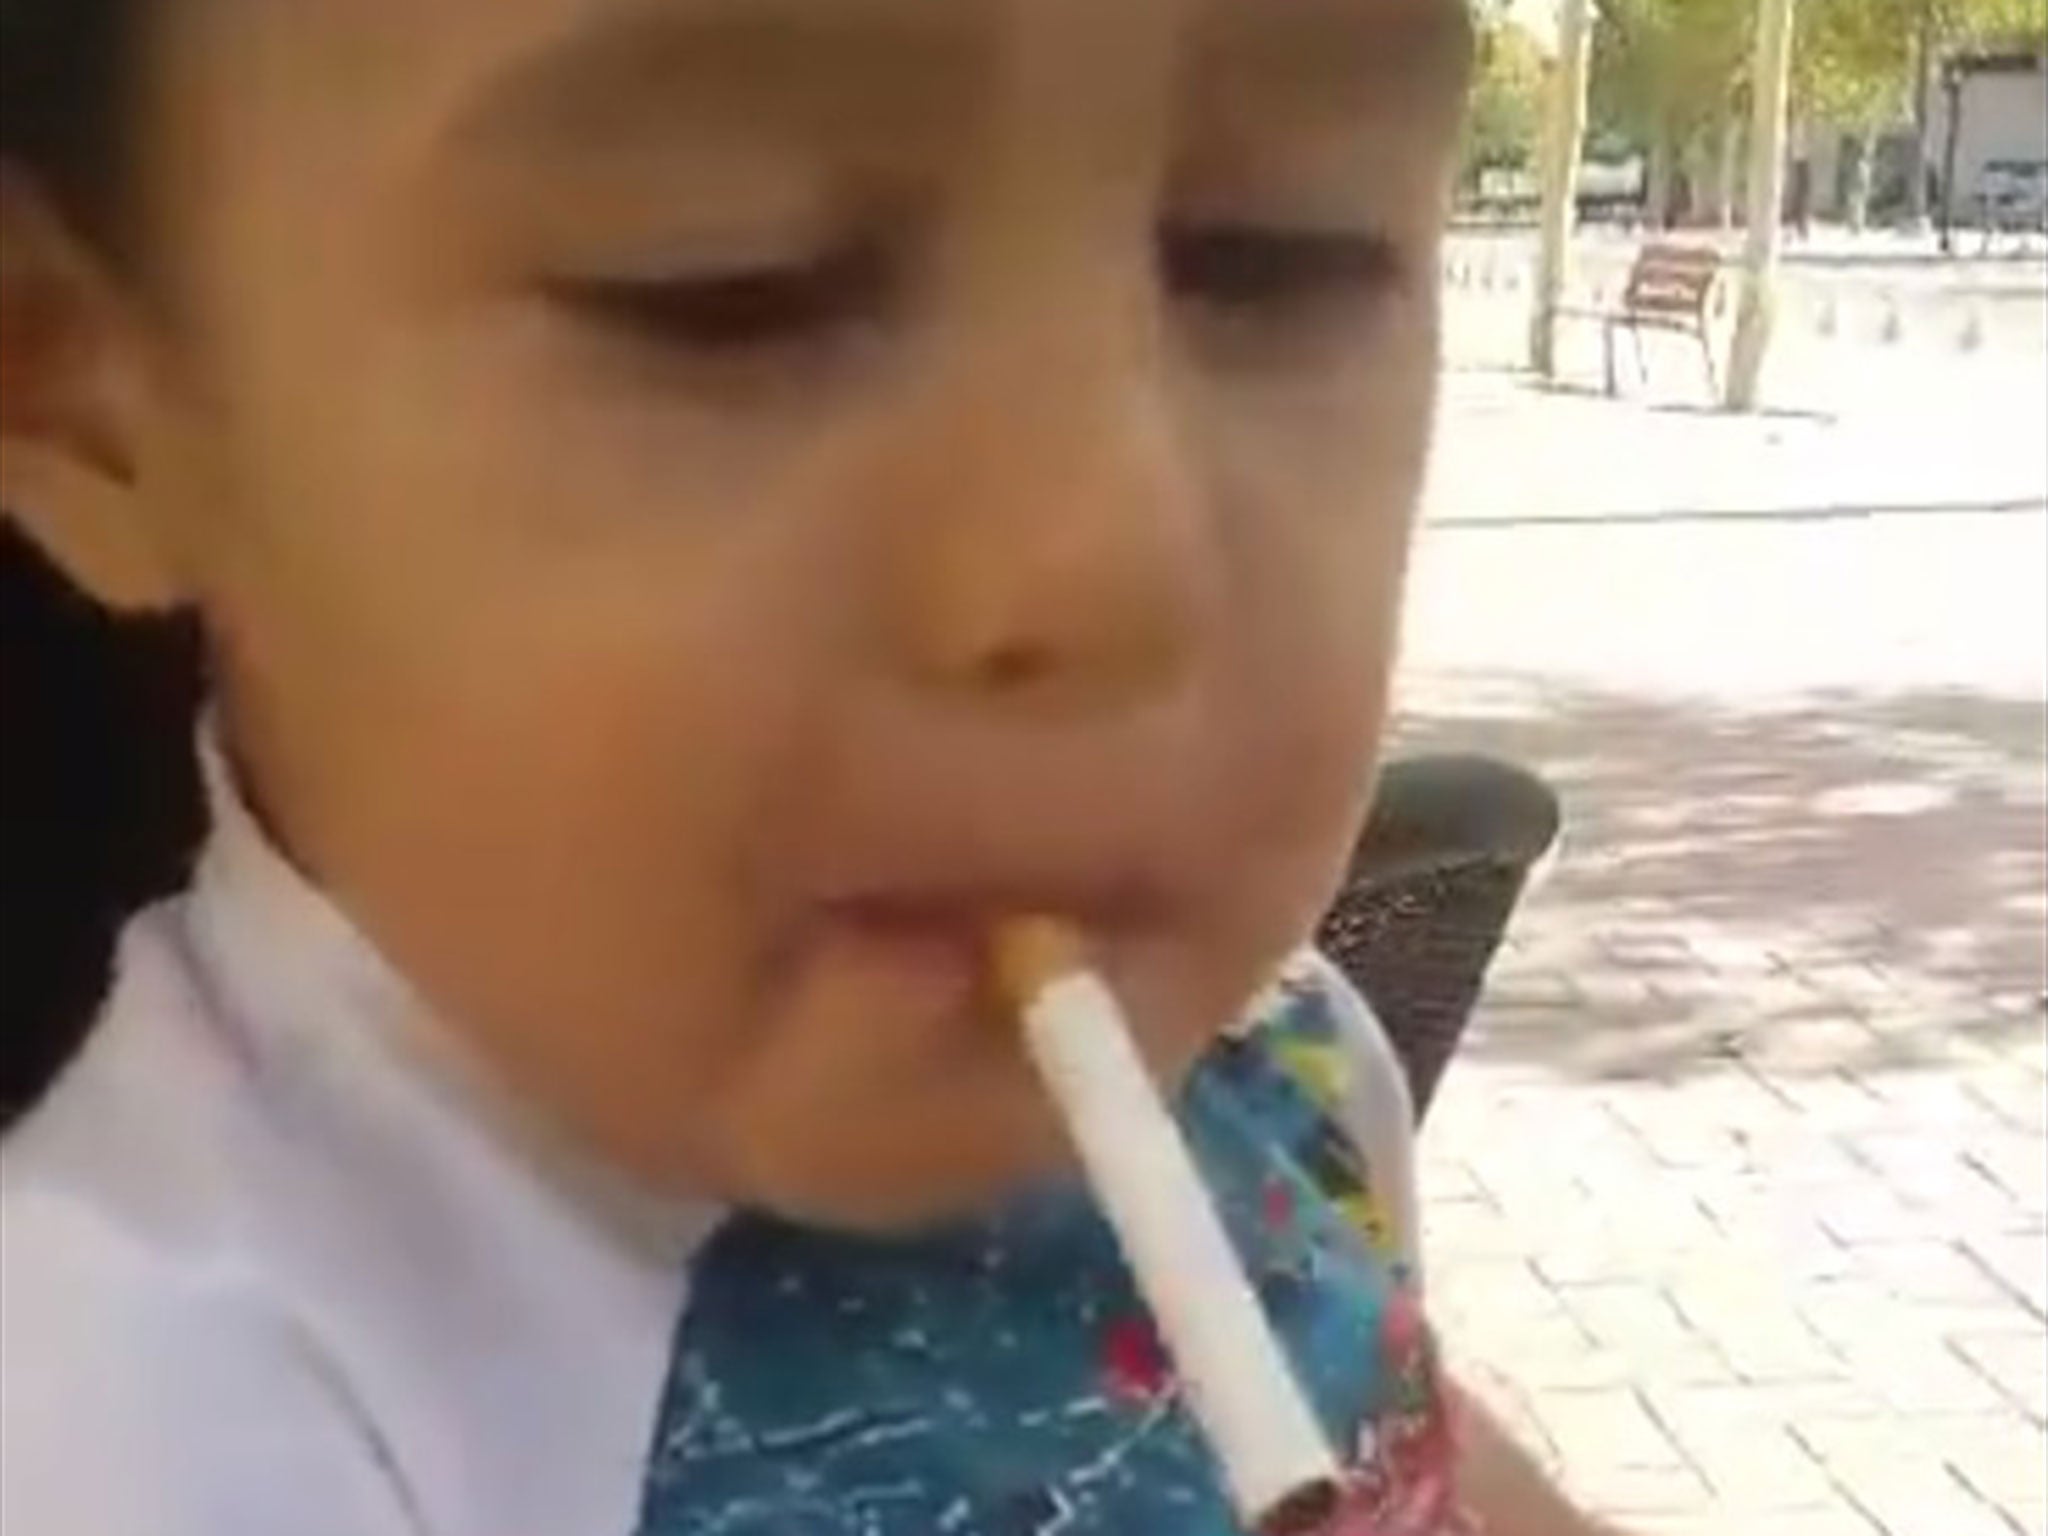 A man lights a cigarette for the little boy